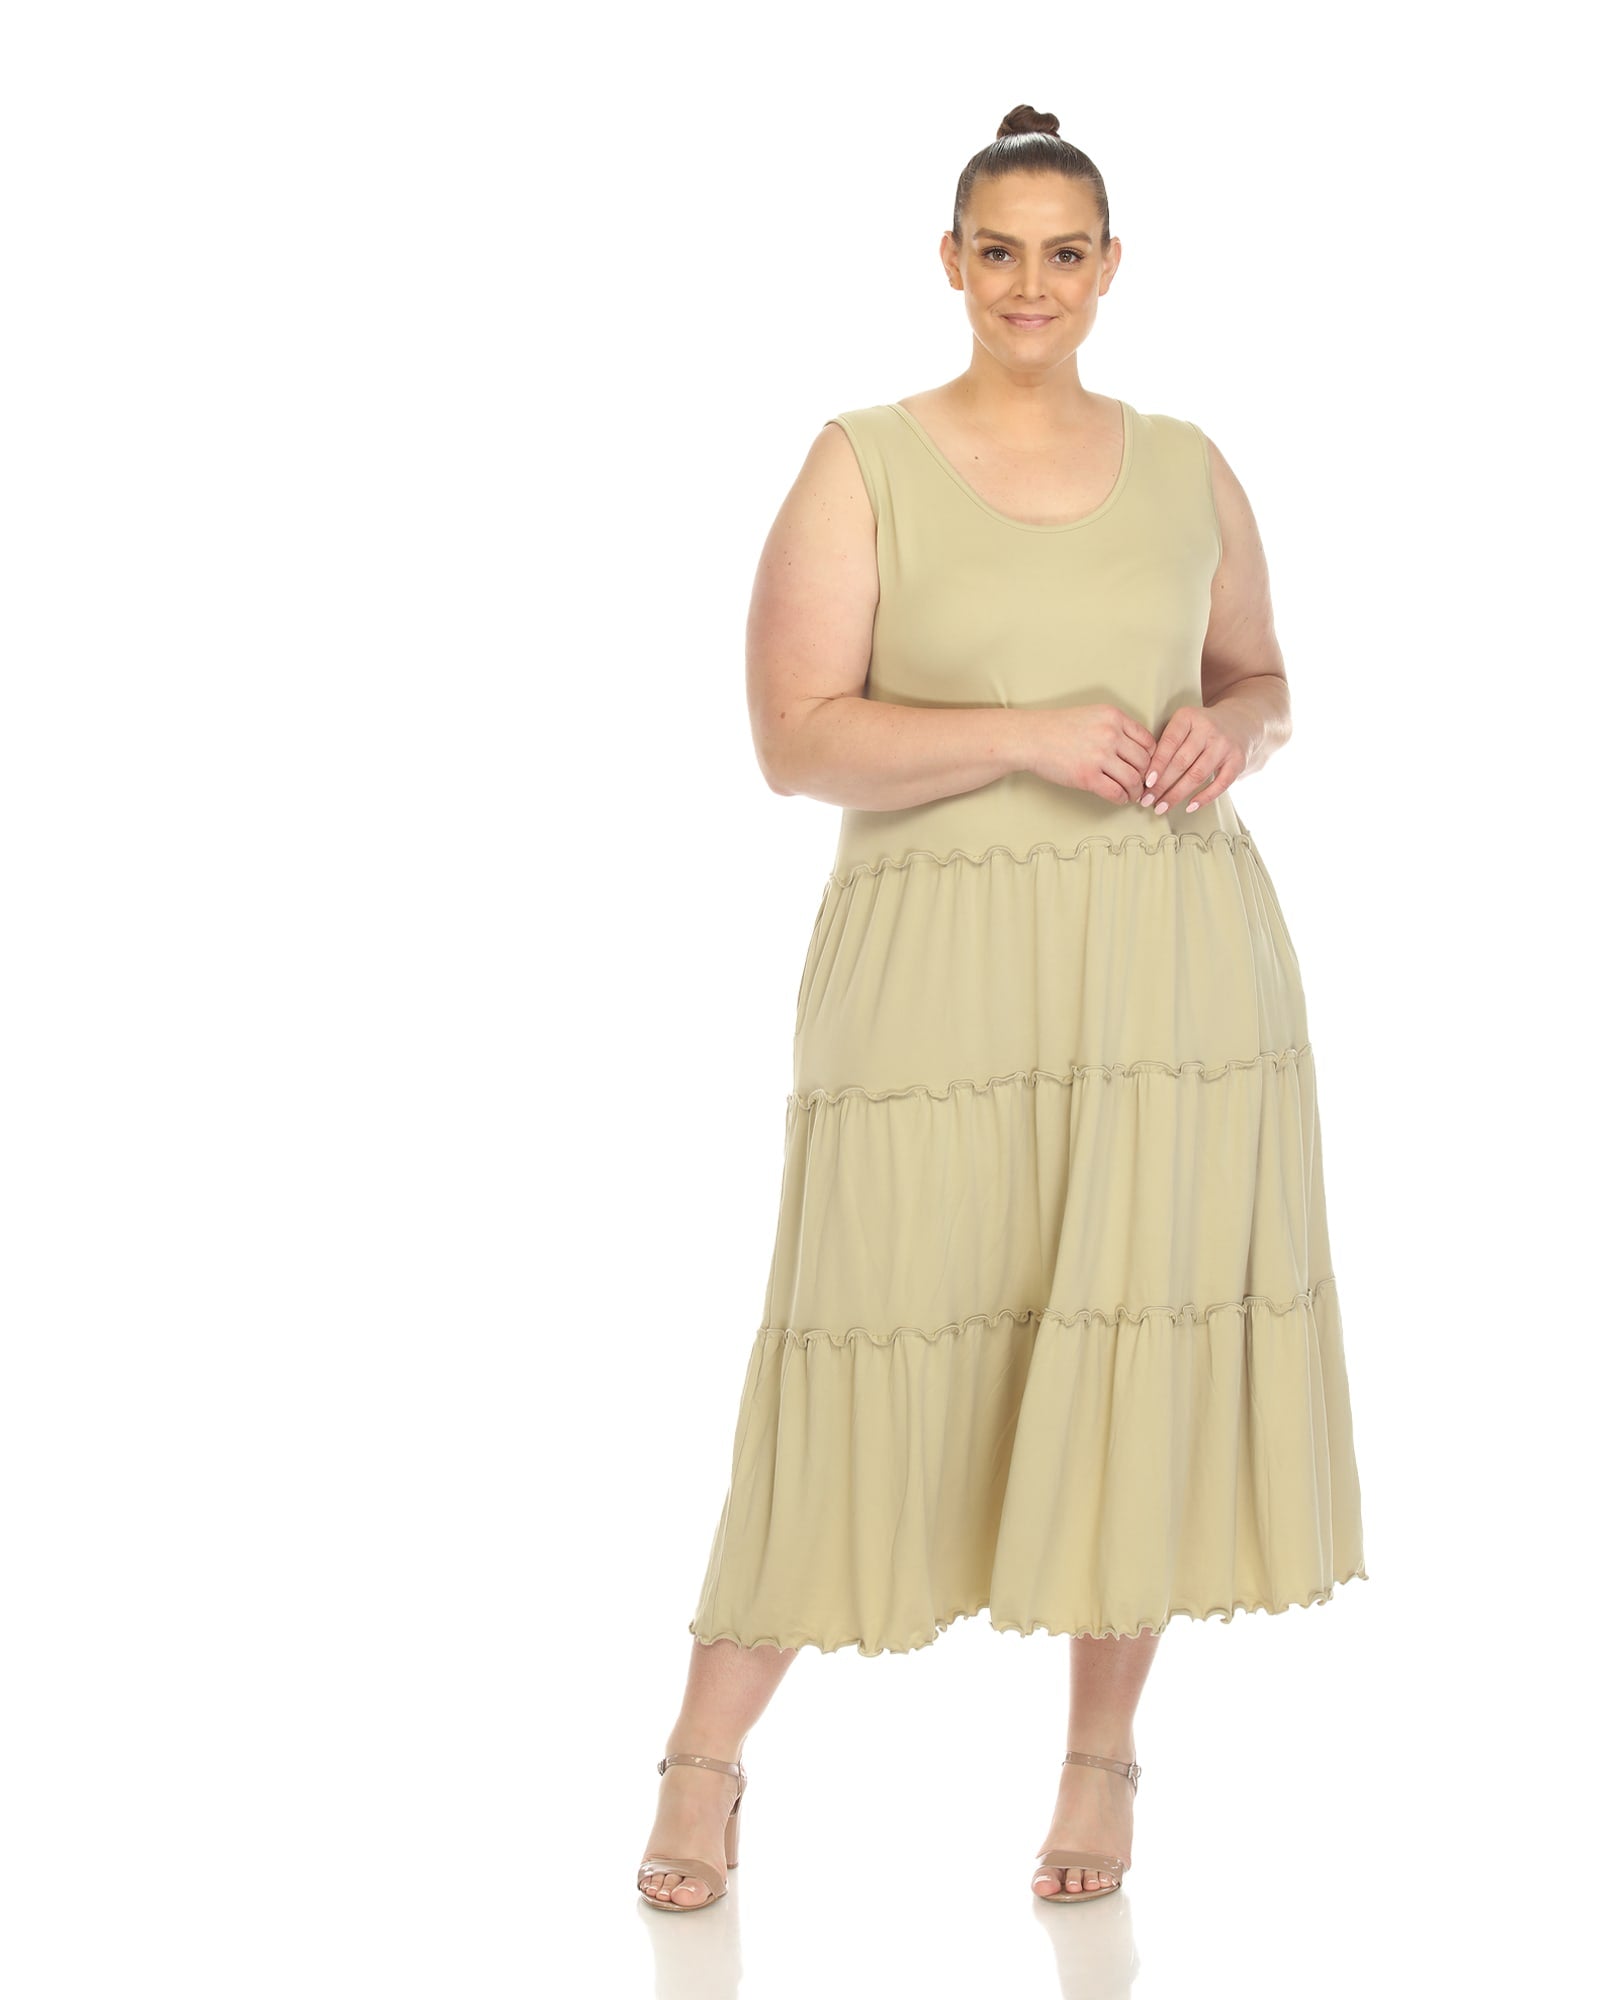 Olive Sleeveless Dress For Curvy Women